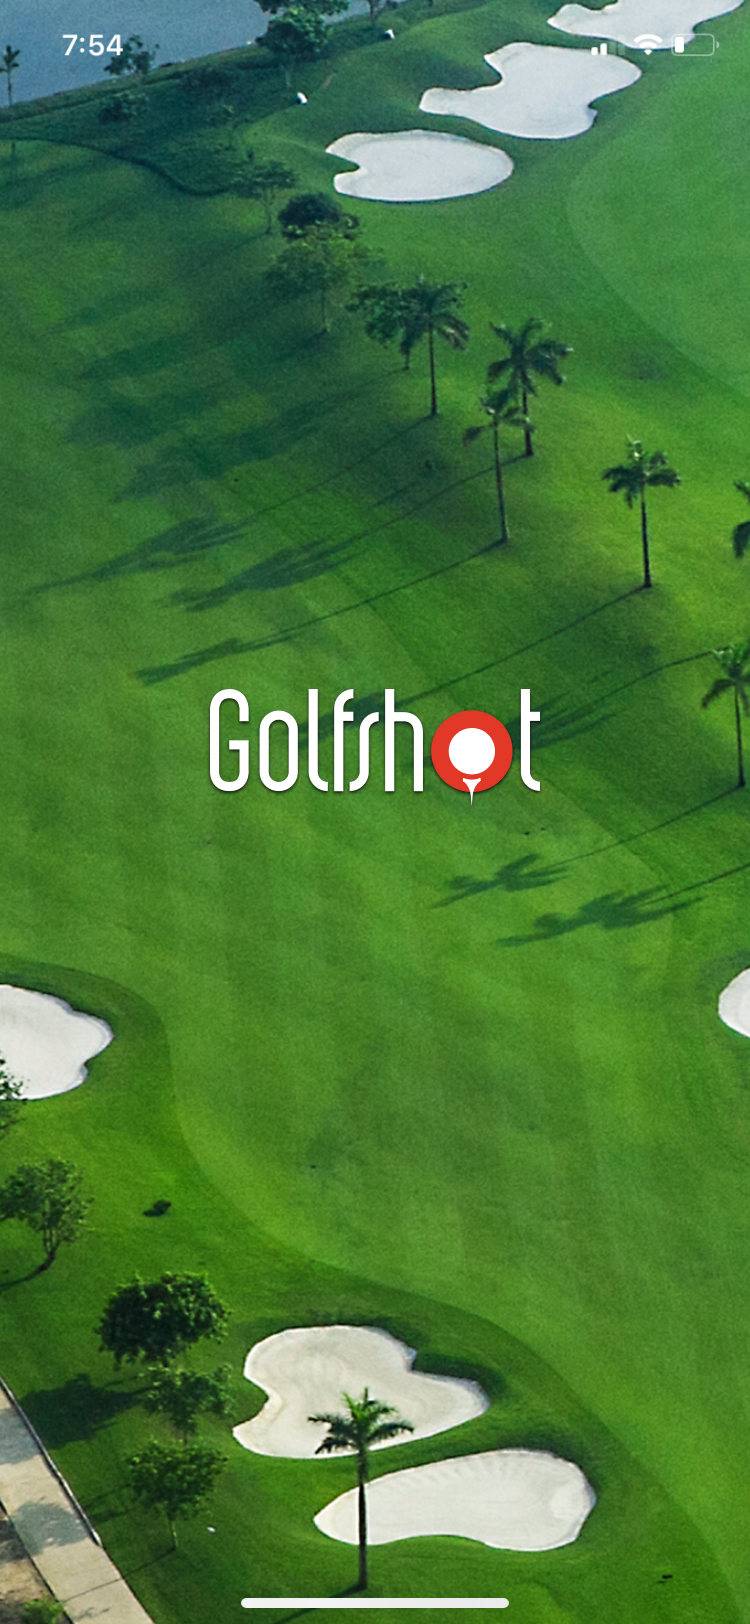 Golfshot startup page